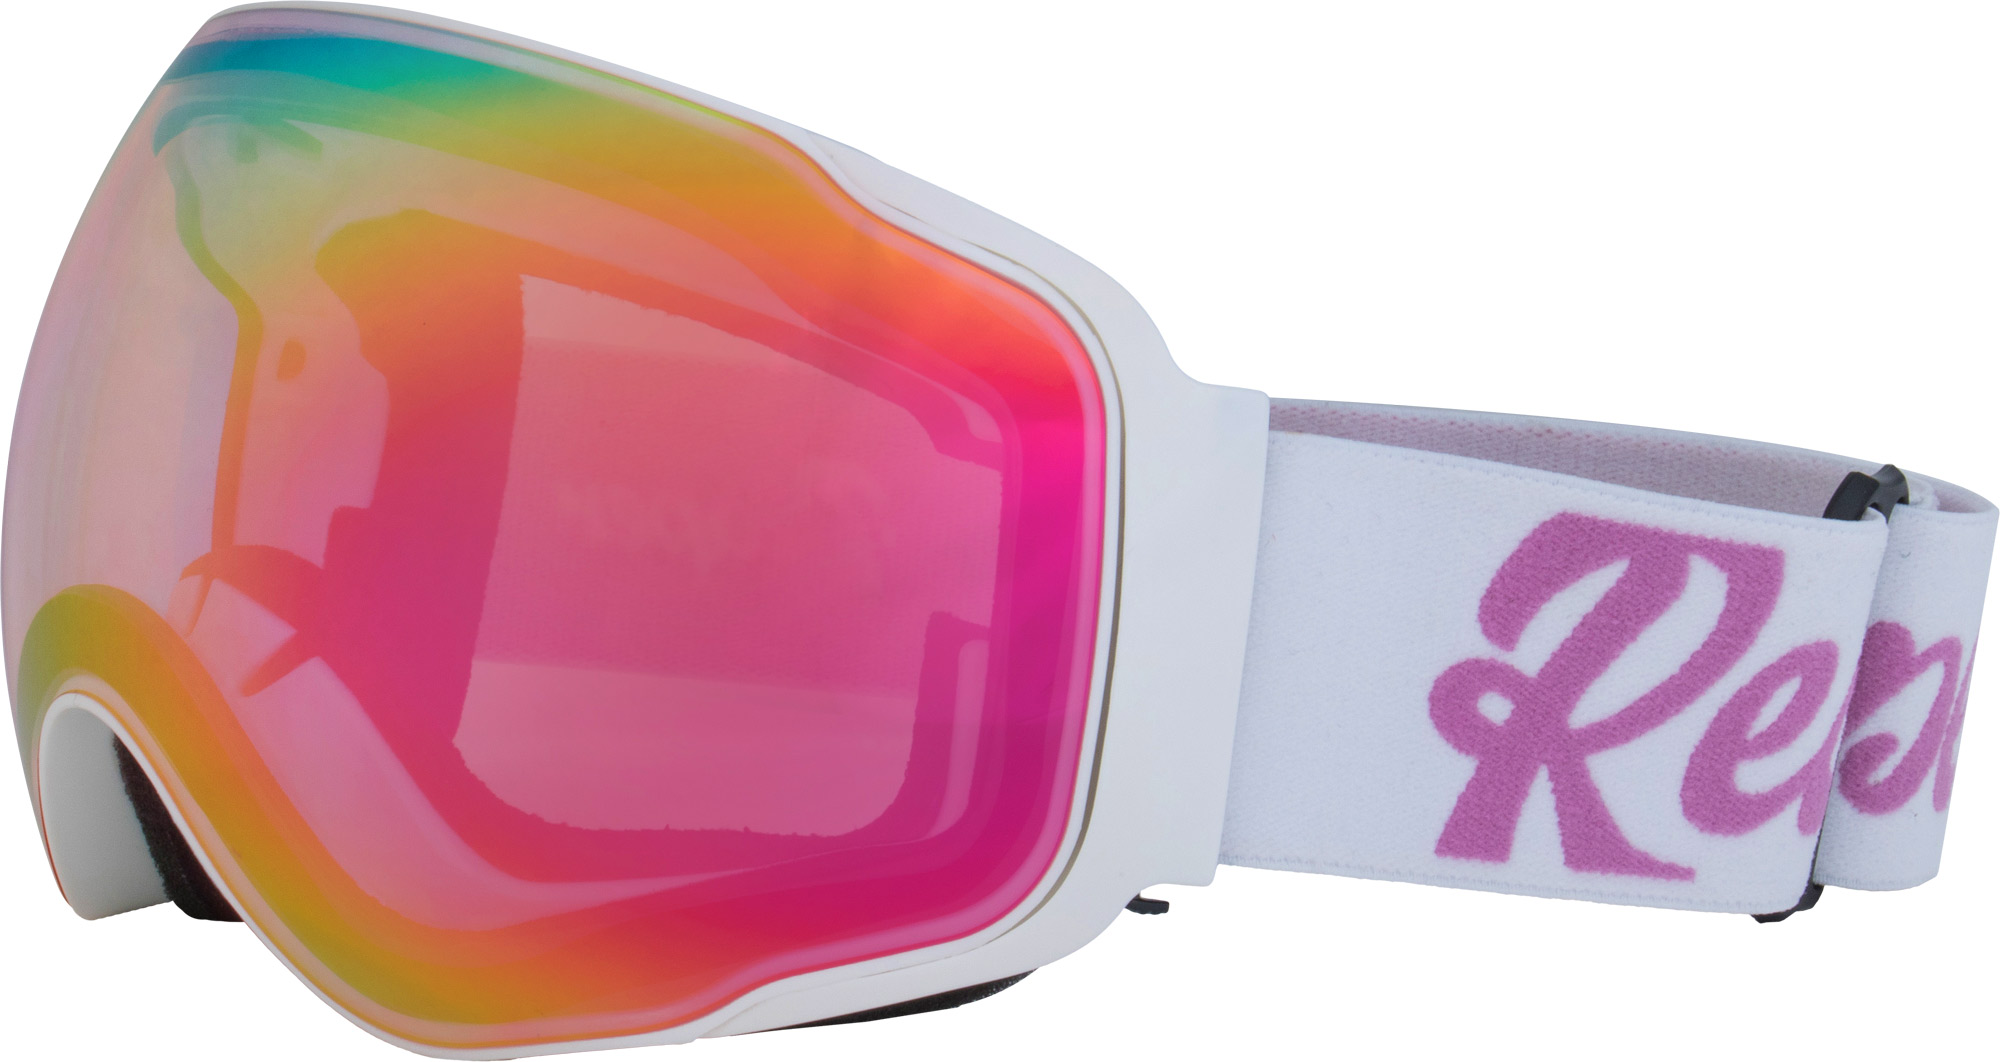 Women’s snowboard goggles